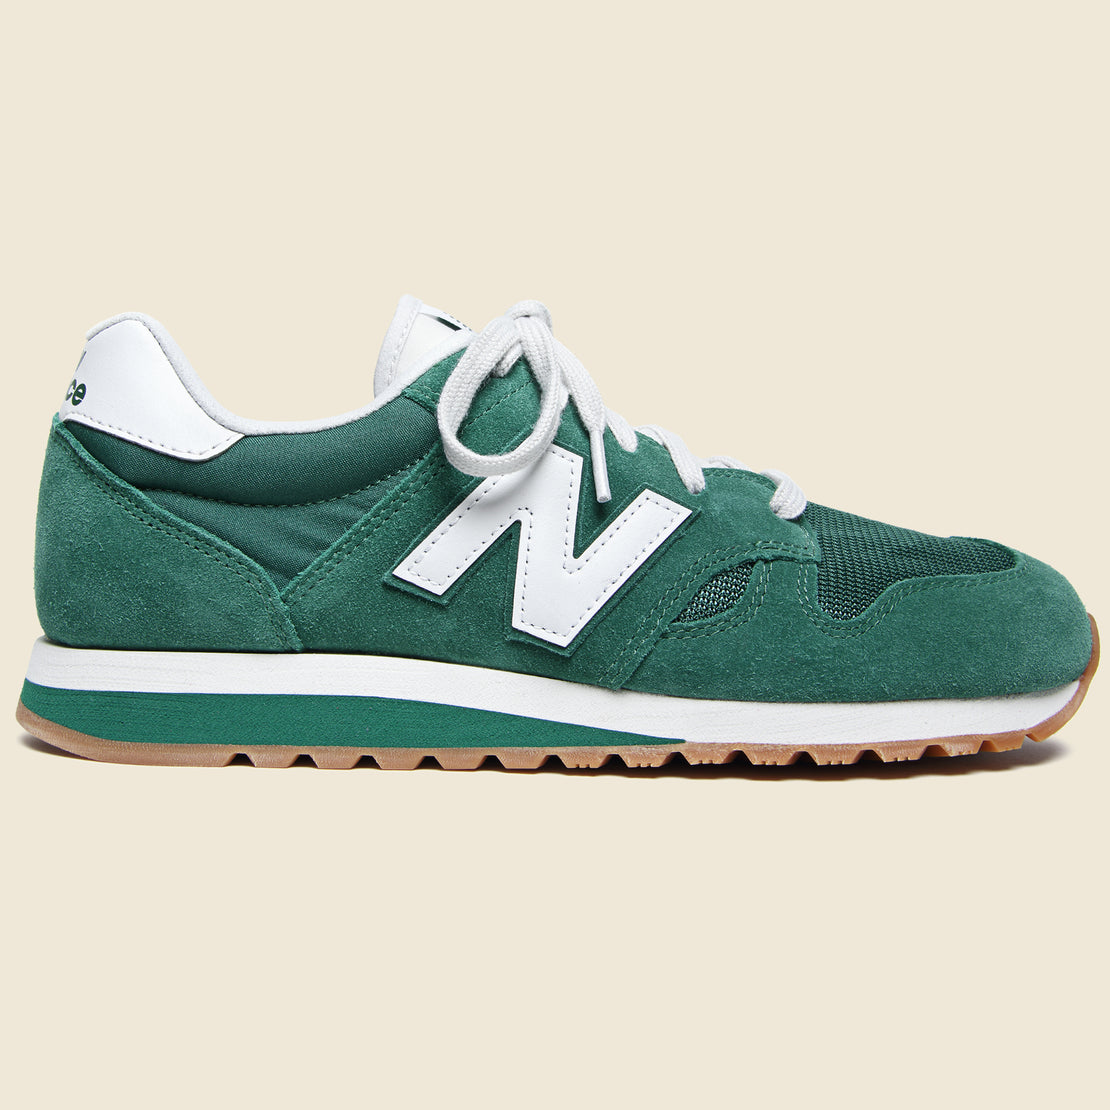 New Balance 520 Sneaker - Forest Green